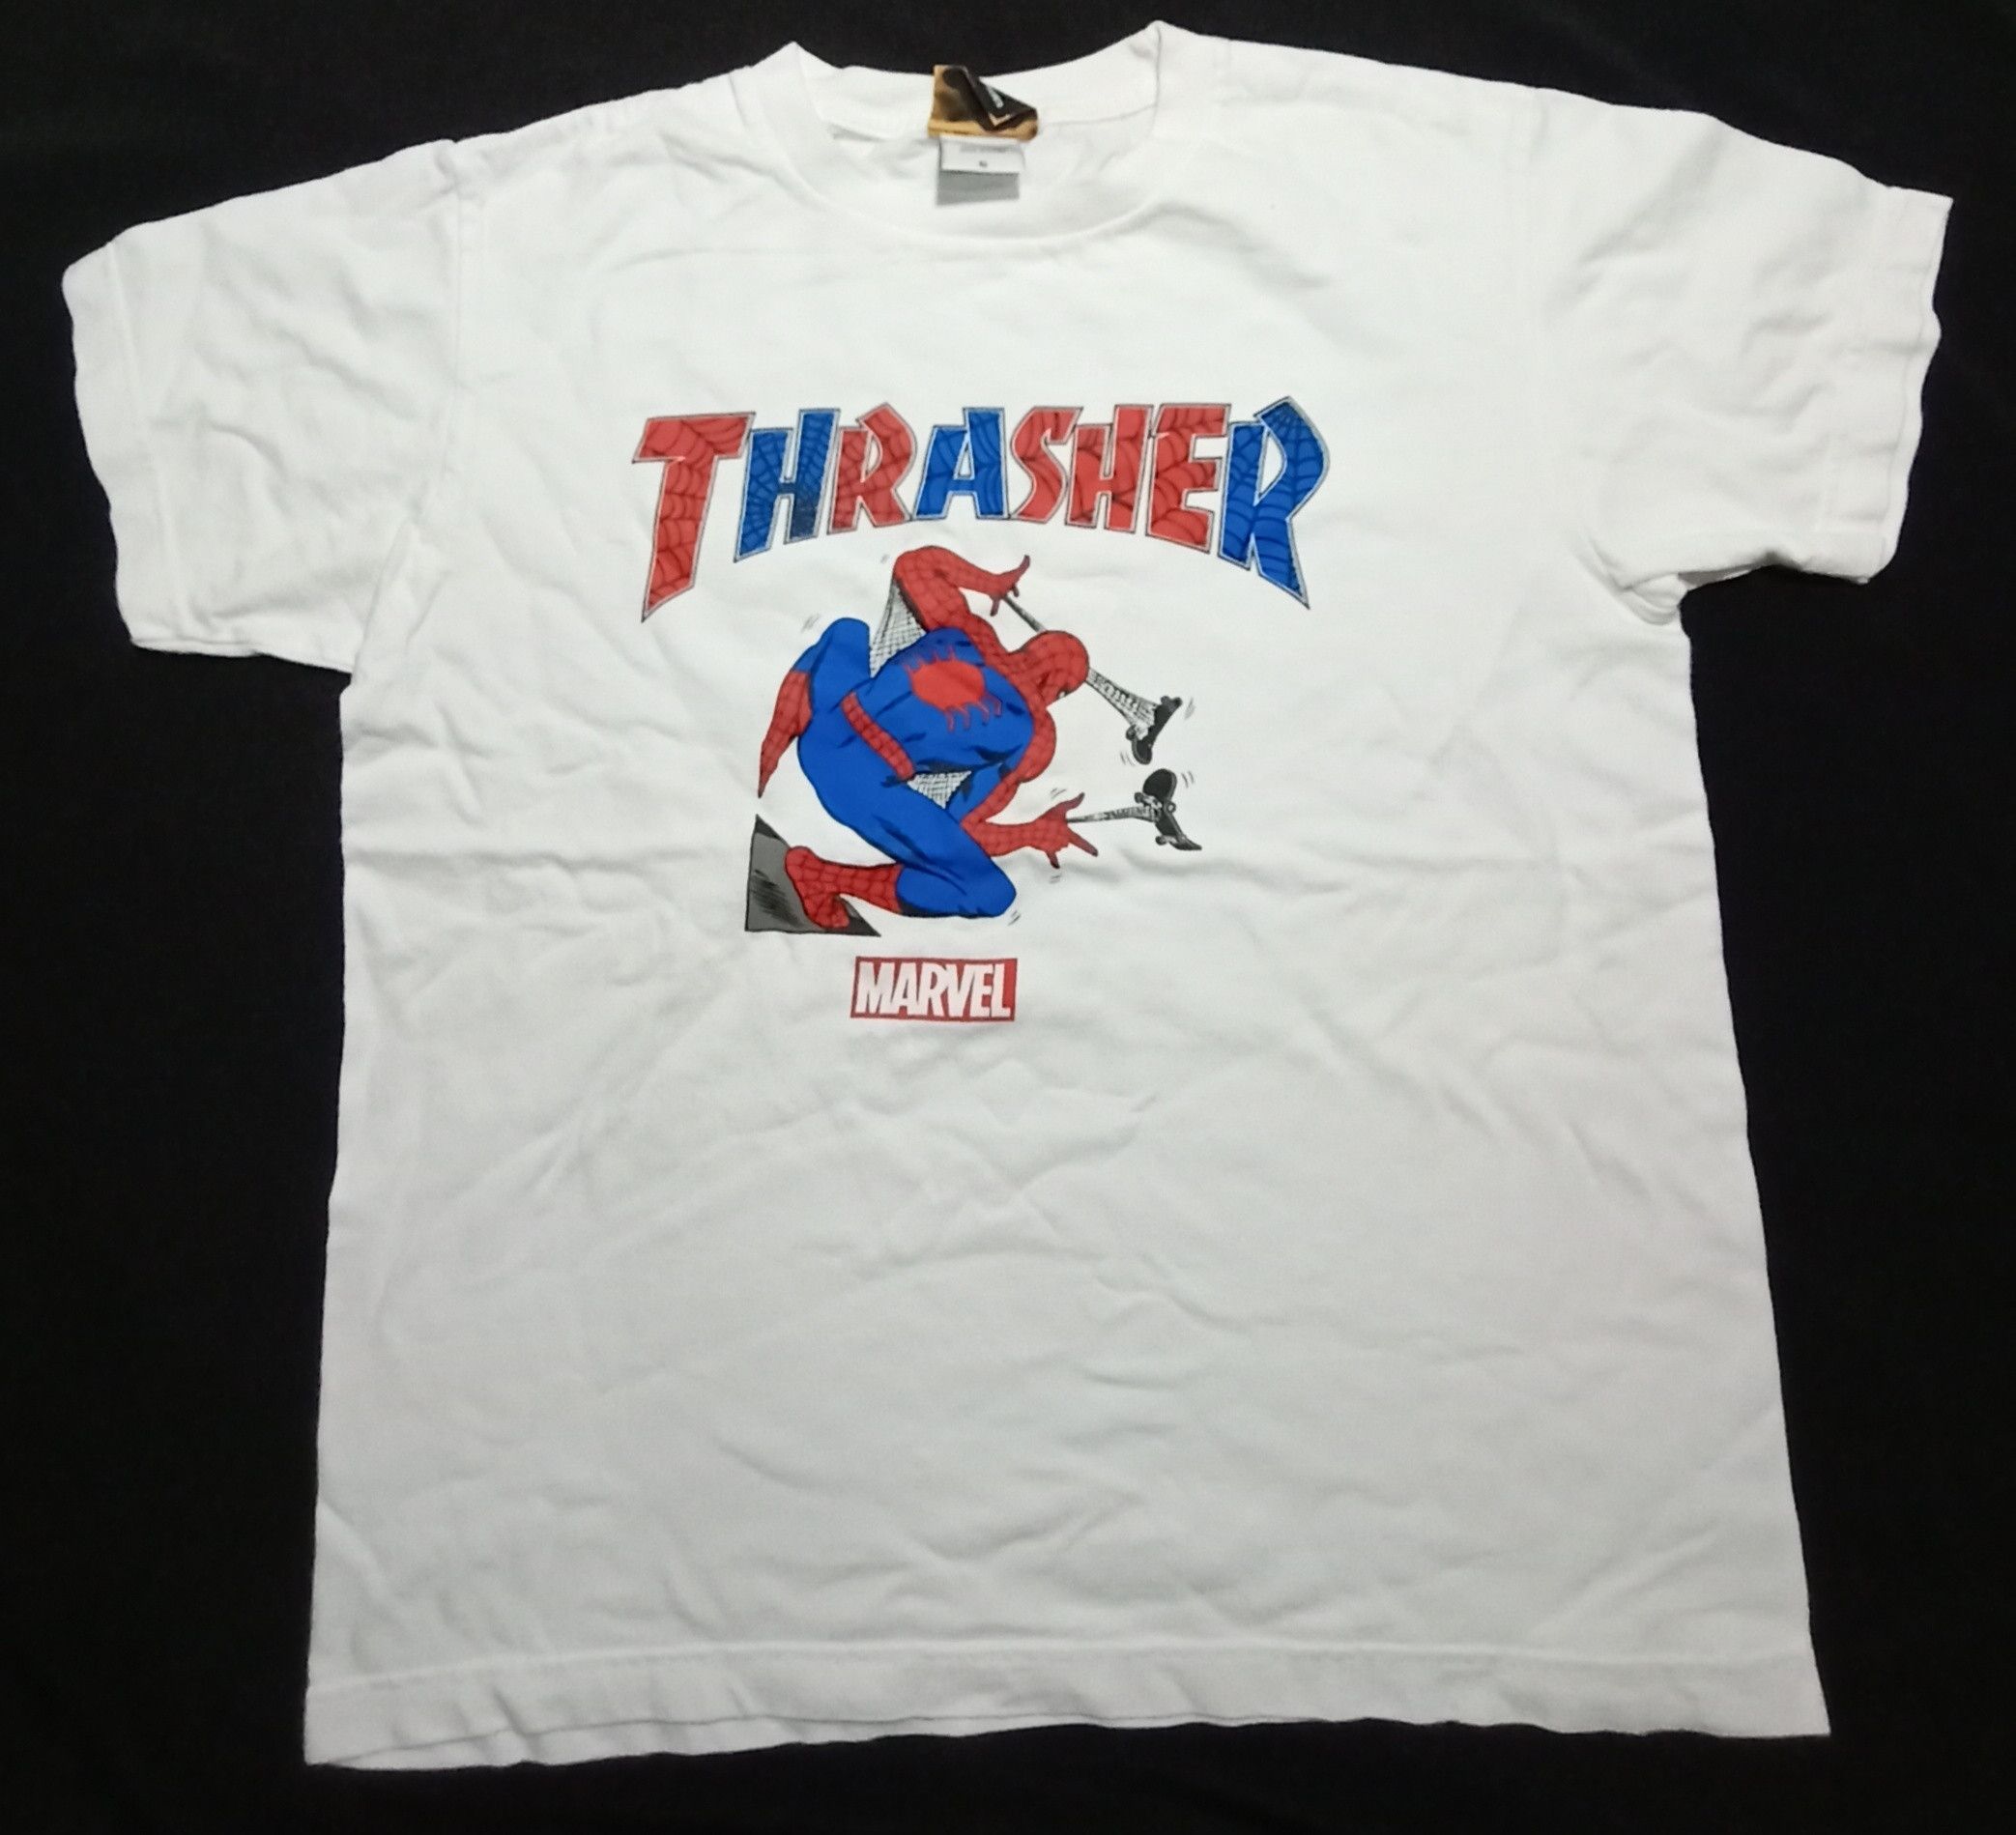 Marvel Comics Marvel Thrasher Spider Man T Shirt Size US S / EU 44-46 / 1 - 1 Preview